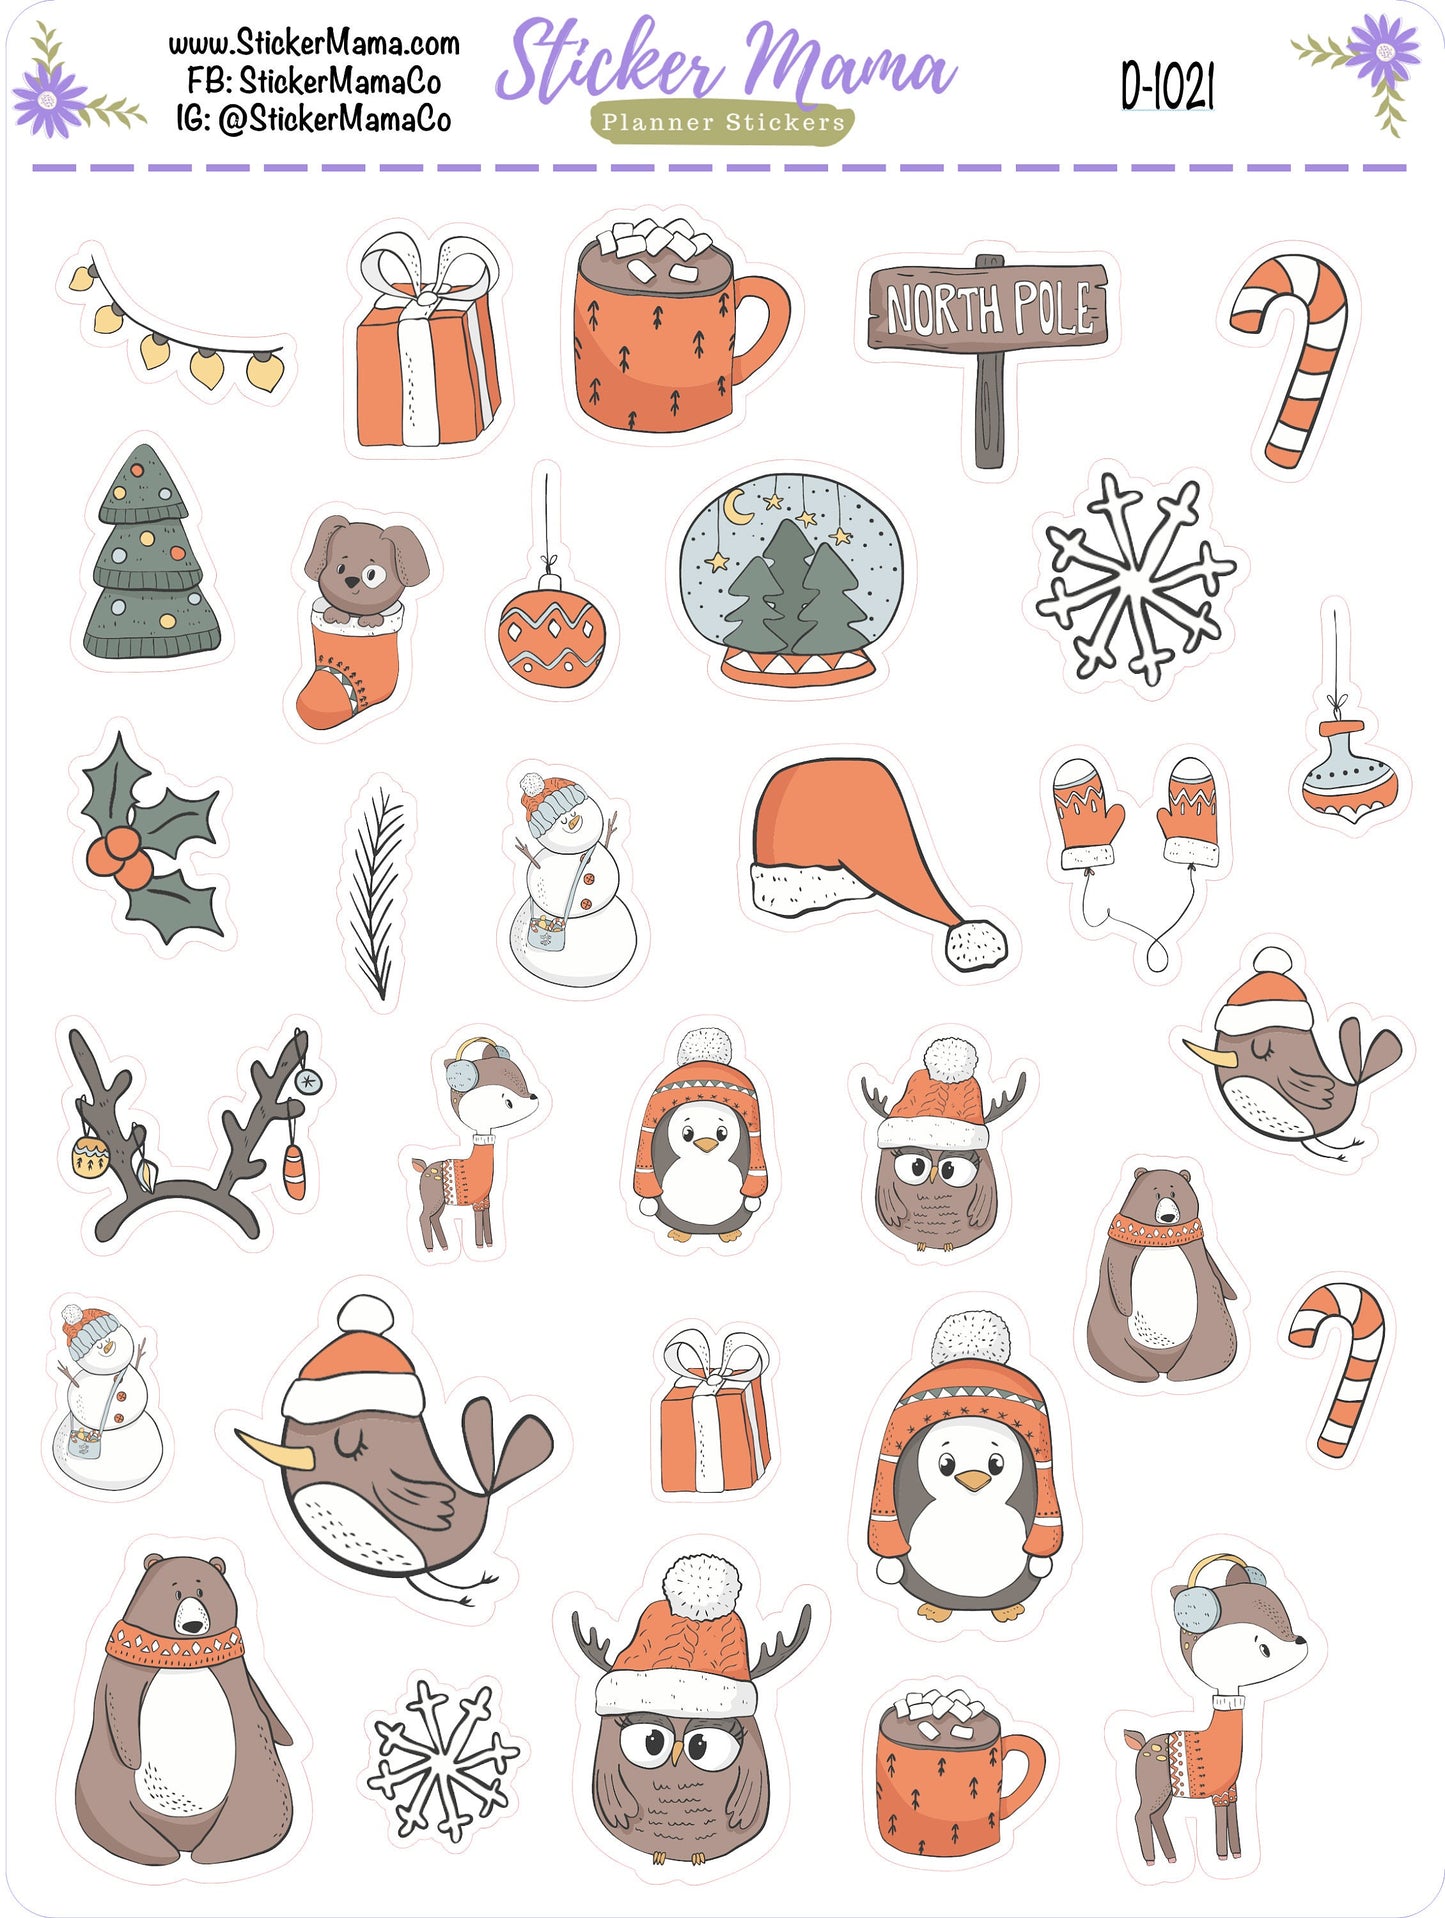 D1021 || CHRISTMAS CUTIES PLANNER Stickers || Winter Stickers || Planner Stickers for Winter